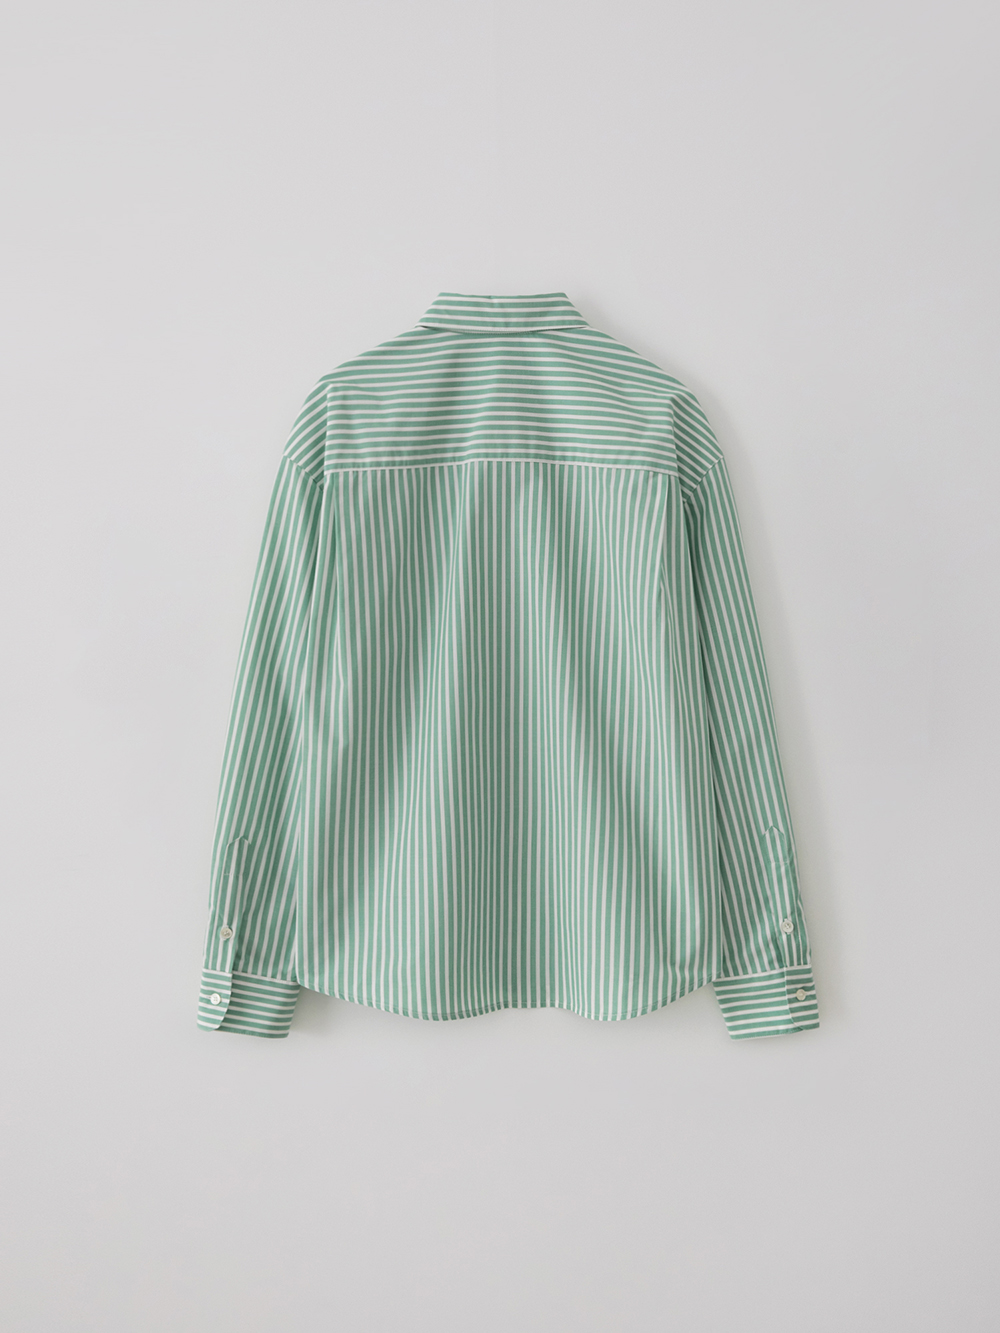 Stripe shirt by ICHIMEN (green)